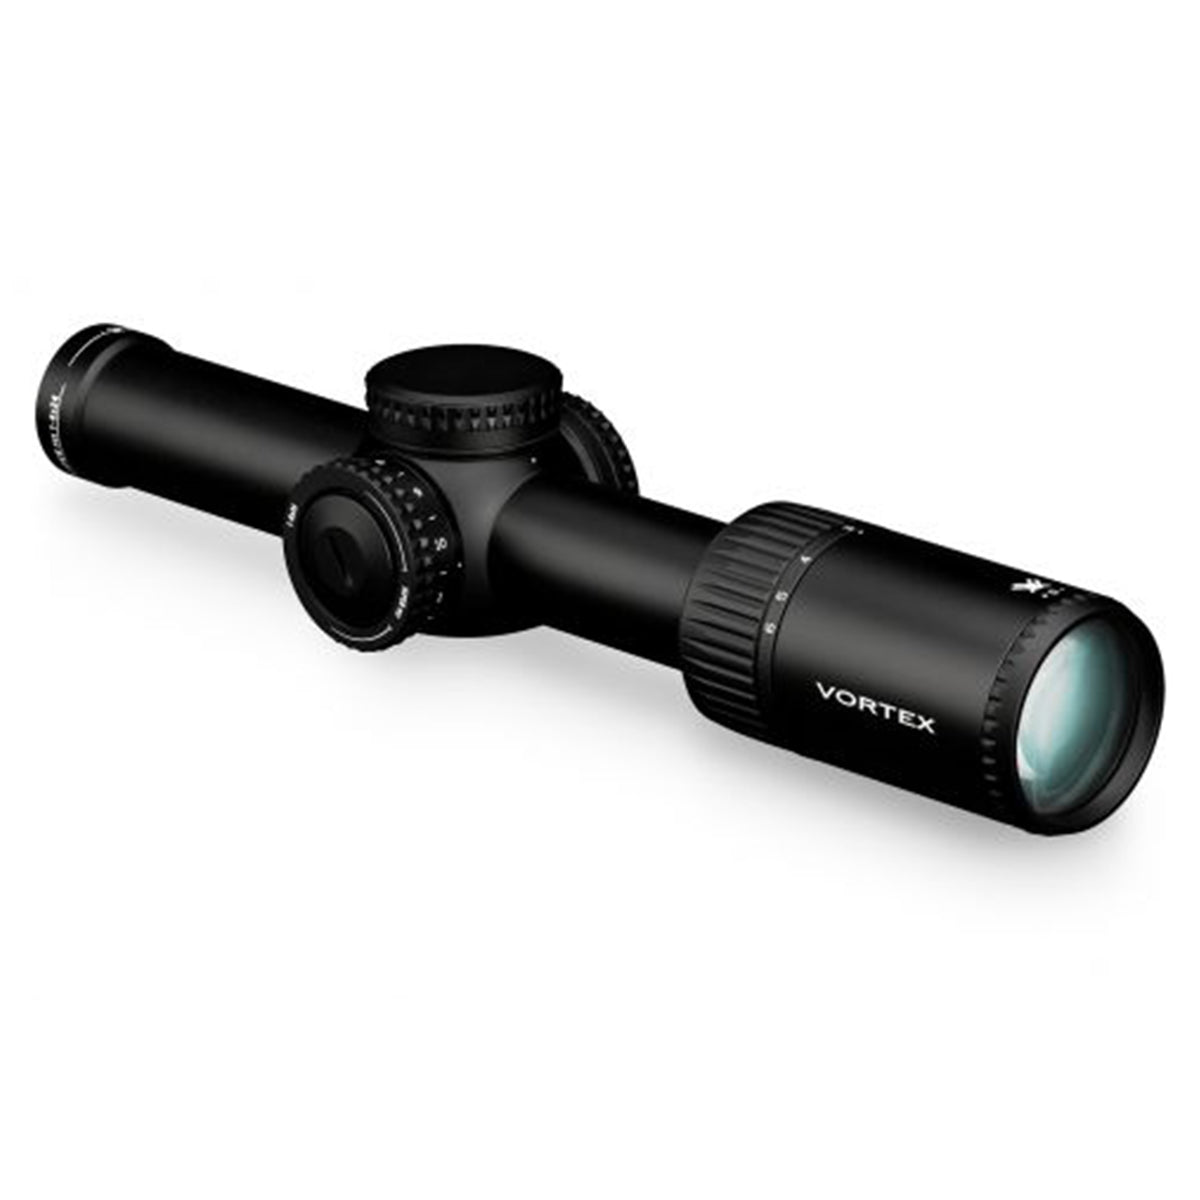 Vortex Viper PST Gen II 1-6x24 Riflescope by Vortex Optics | Optics - goHUNT Shop